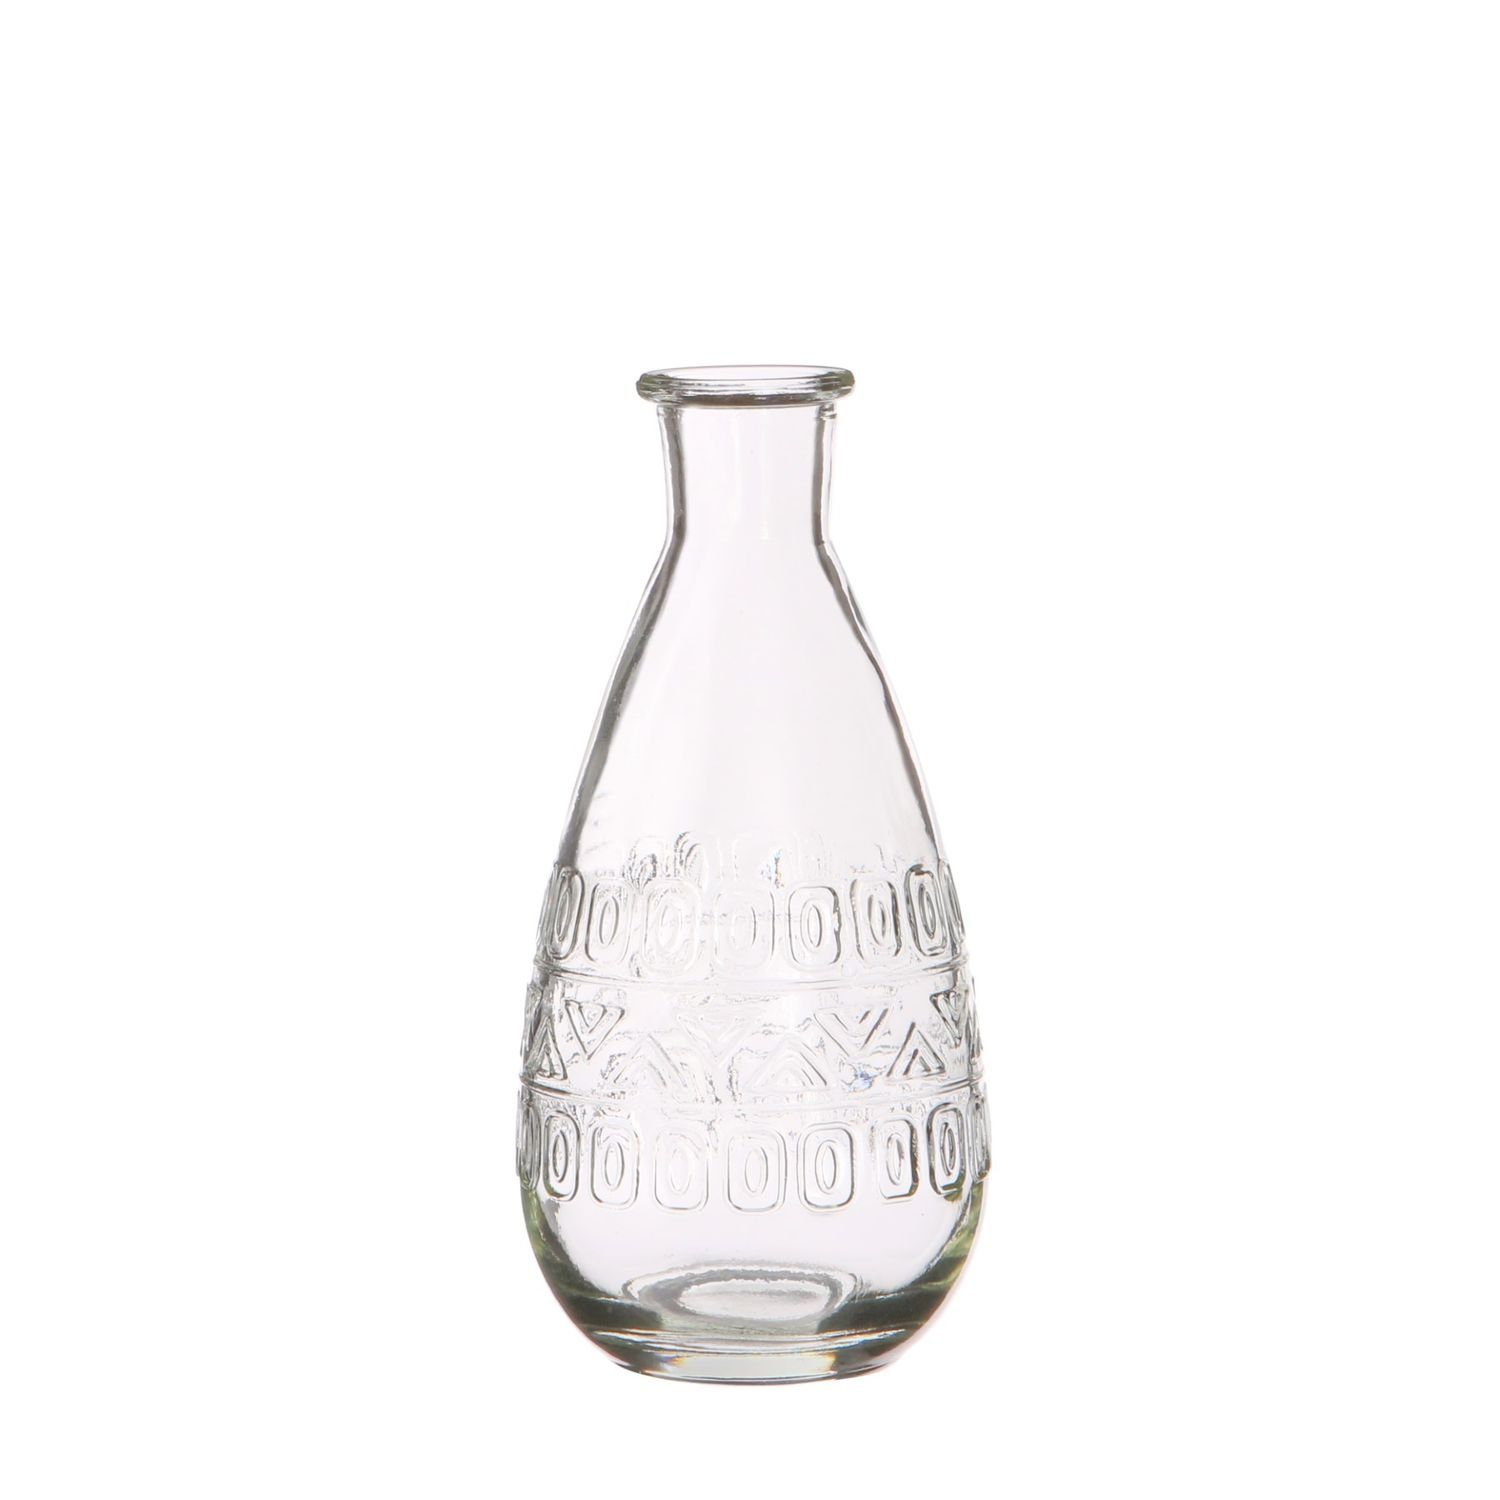 NaDeco Dekovase Glas Flasche Rome in Glasklar h. 15,8 cm Ø 7,5 cm